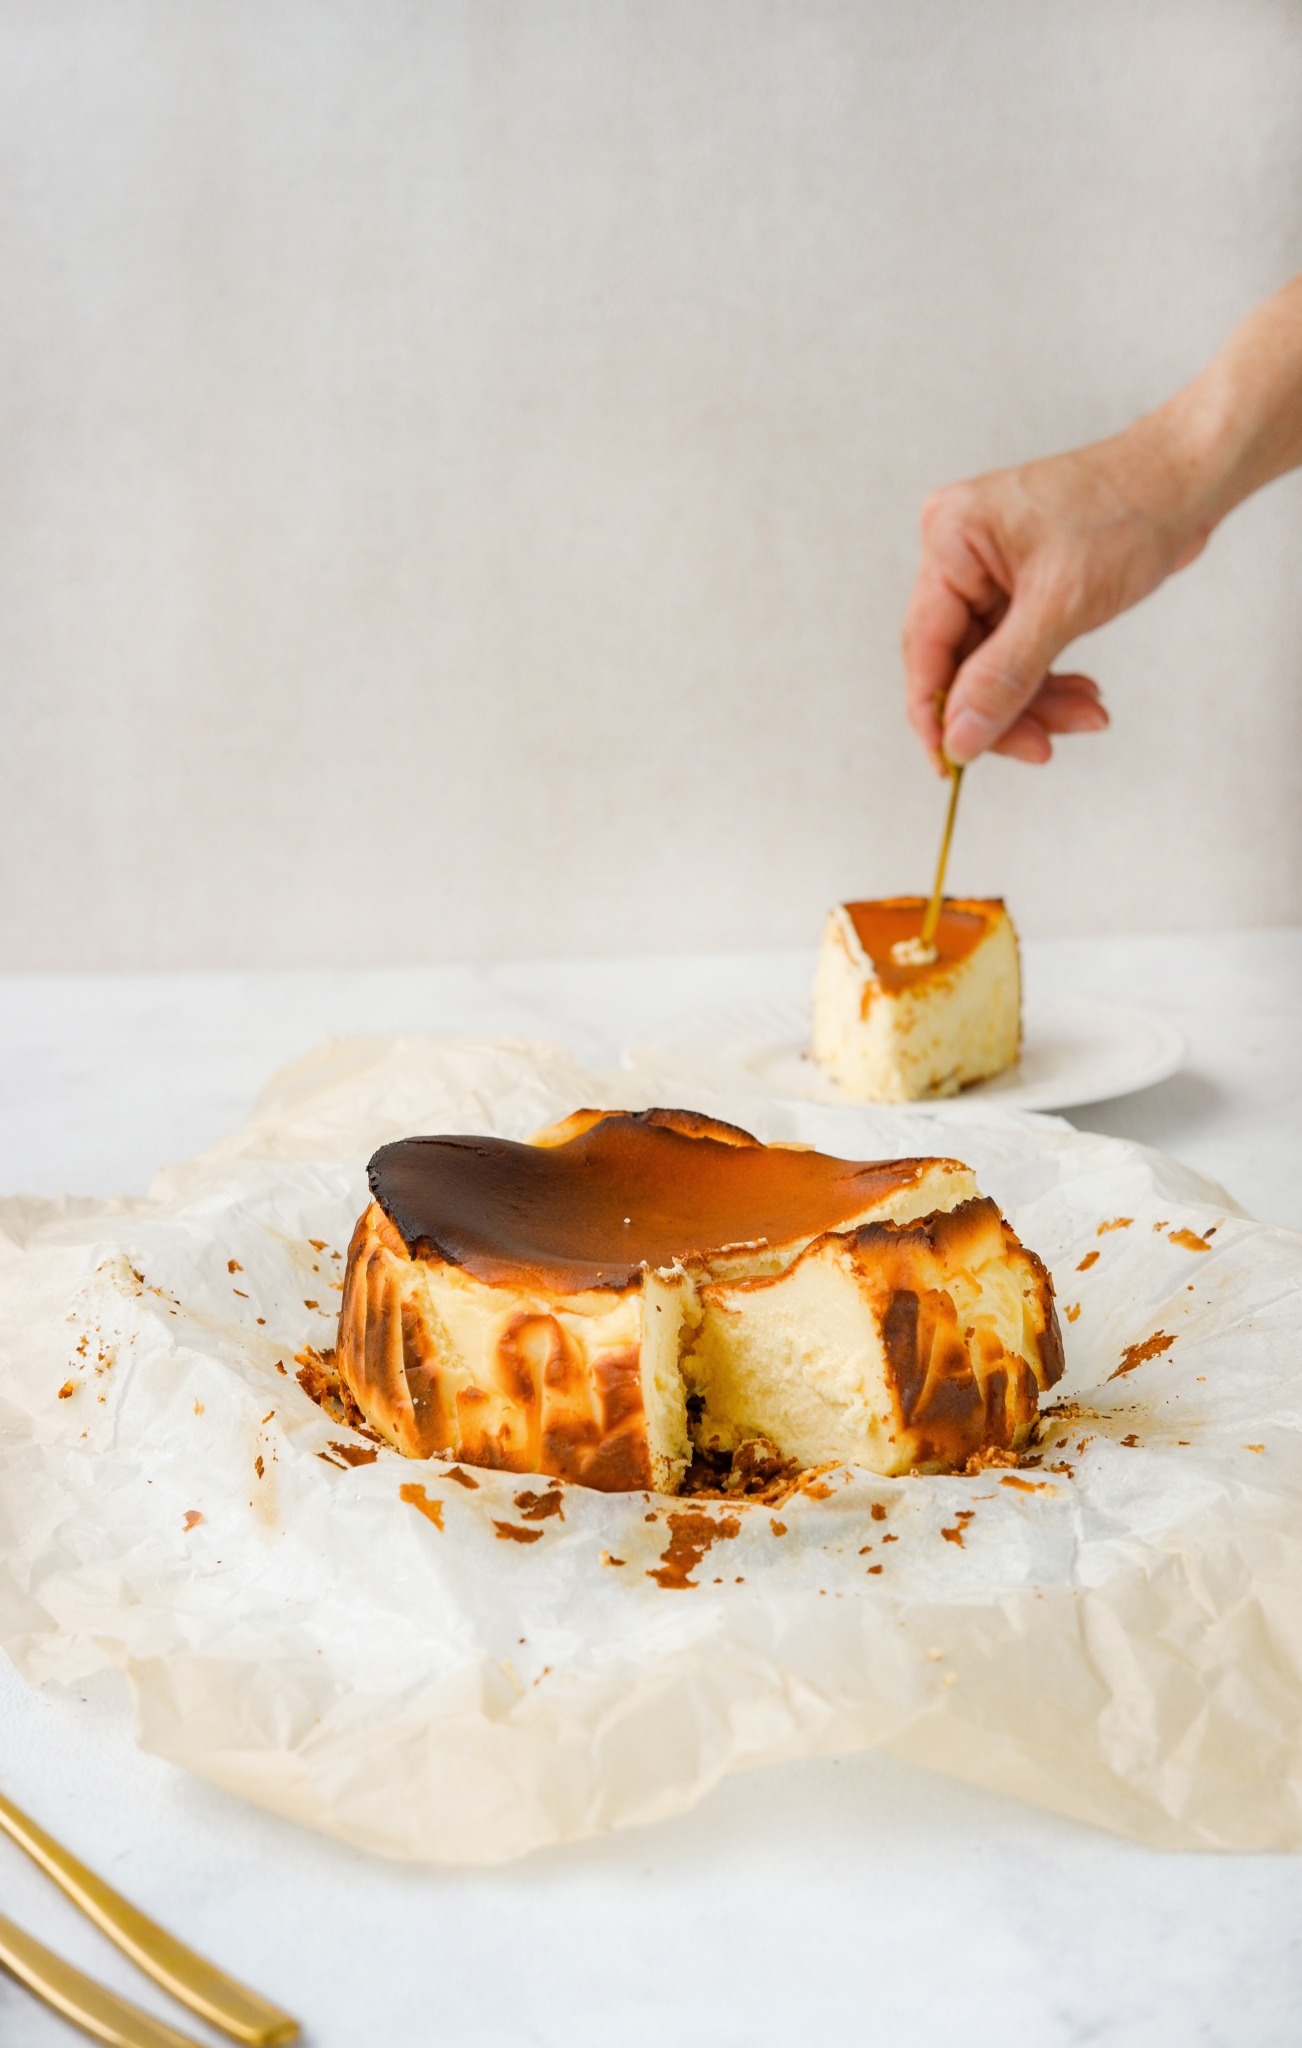 The great british baking show burnt basque cheesecake